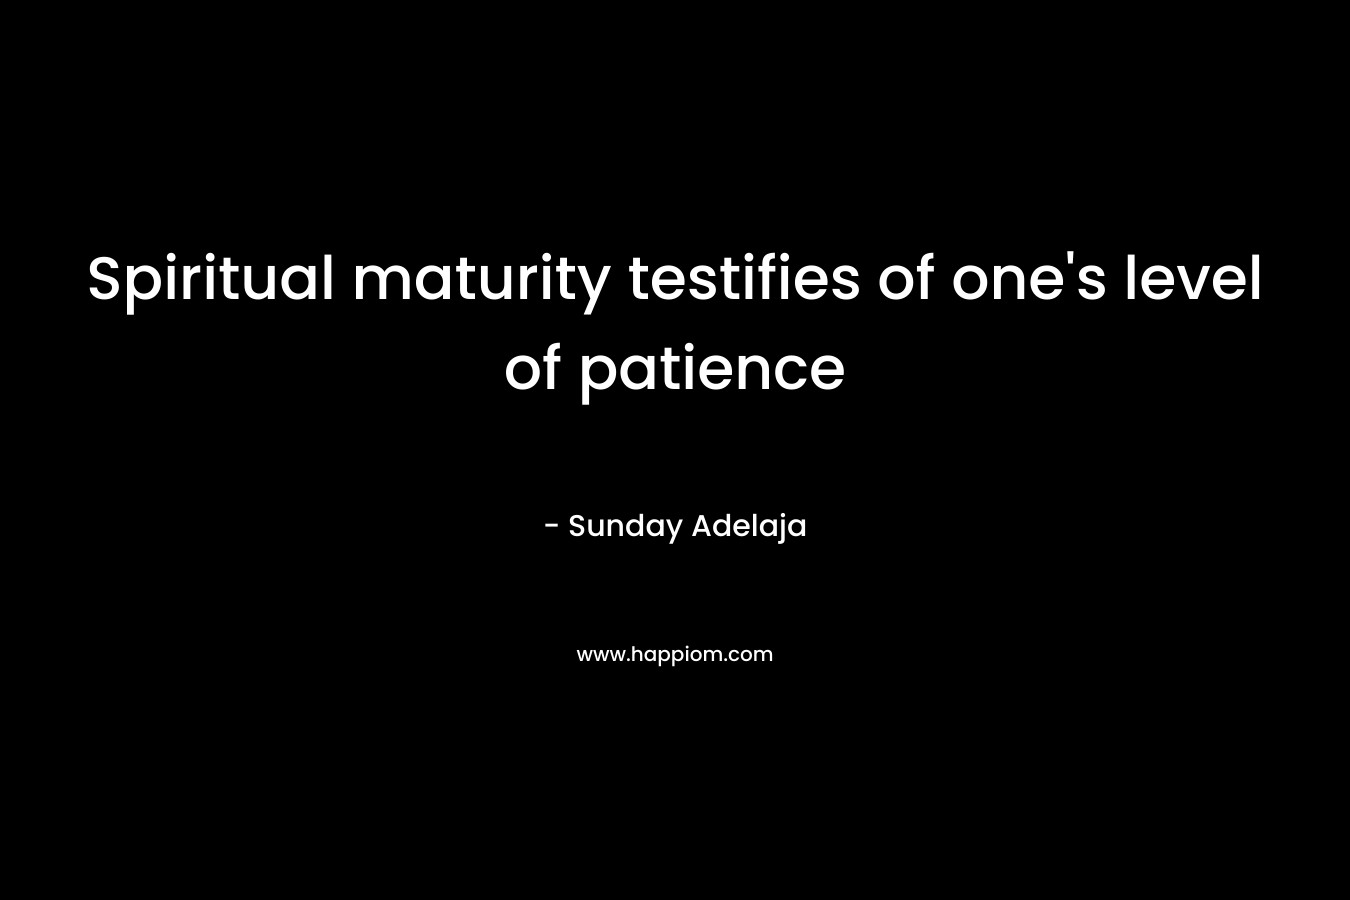 Spiritual maturity testifies of one's level of patience